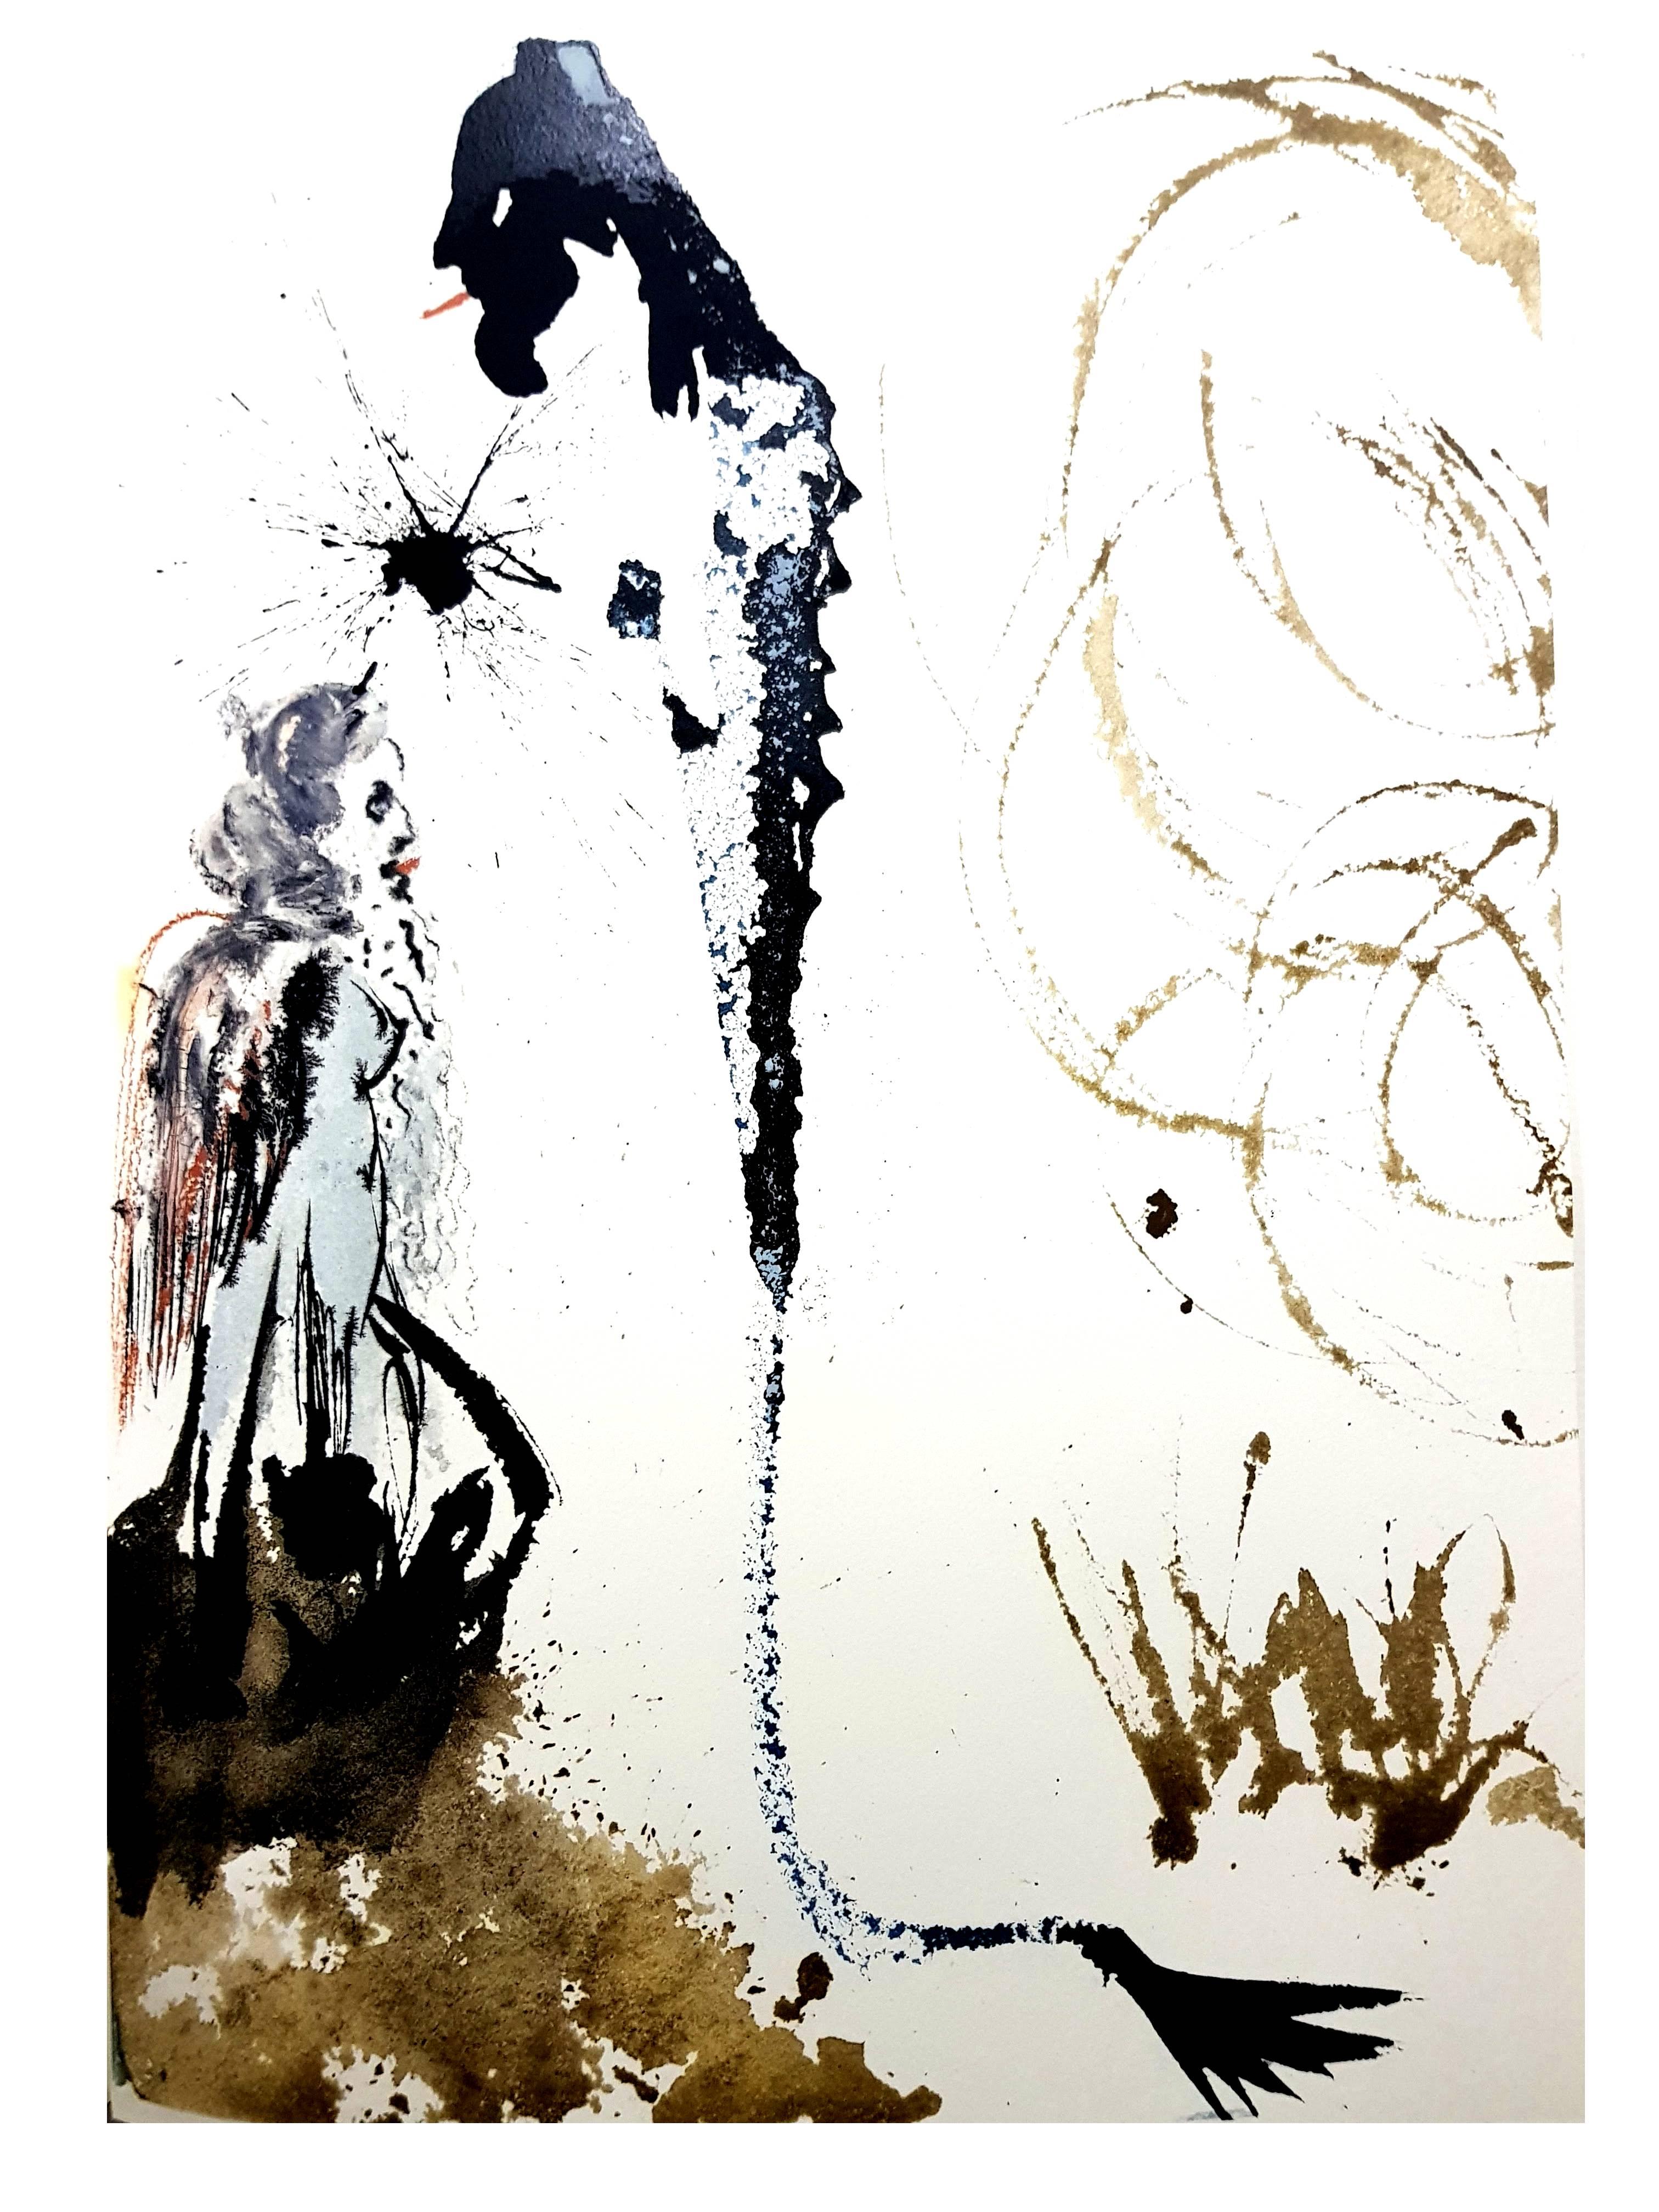 Salvador Dali - Biblia Sacra - Lithograph - Surrealist Print by Salvador Dalí